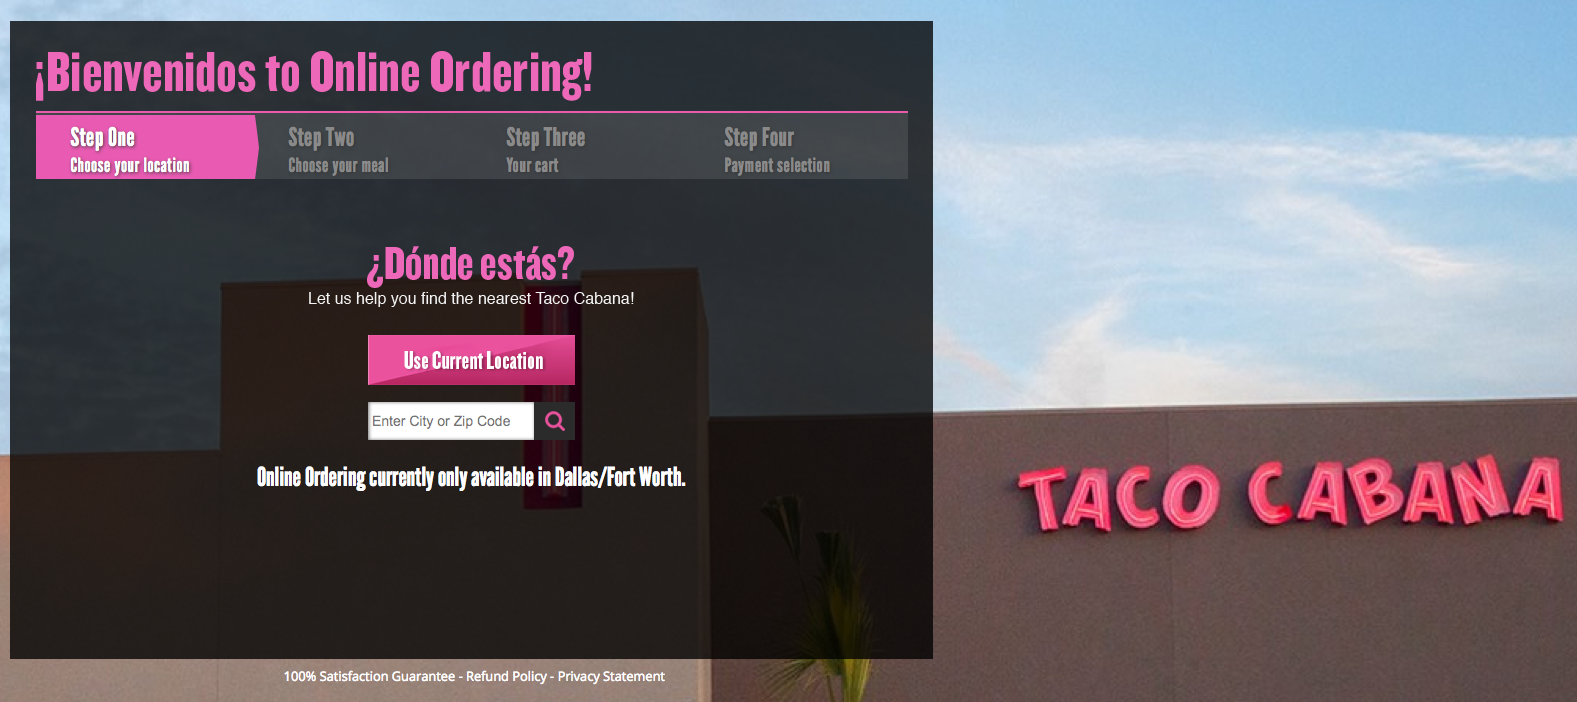 Taco Cabana Online Ordering